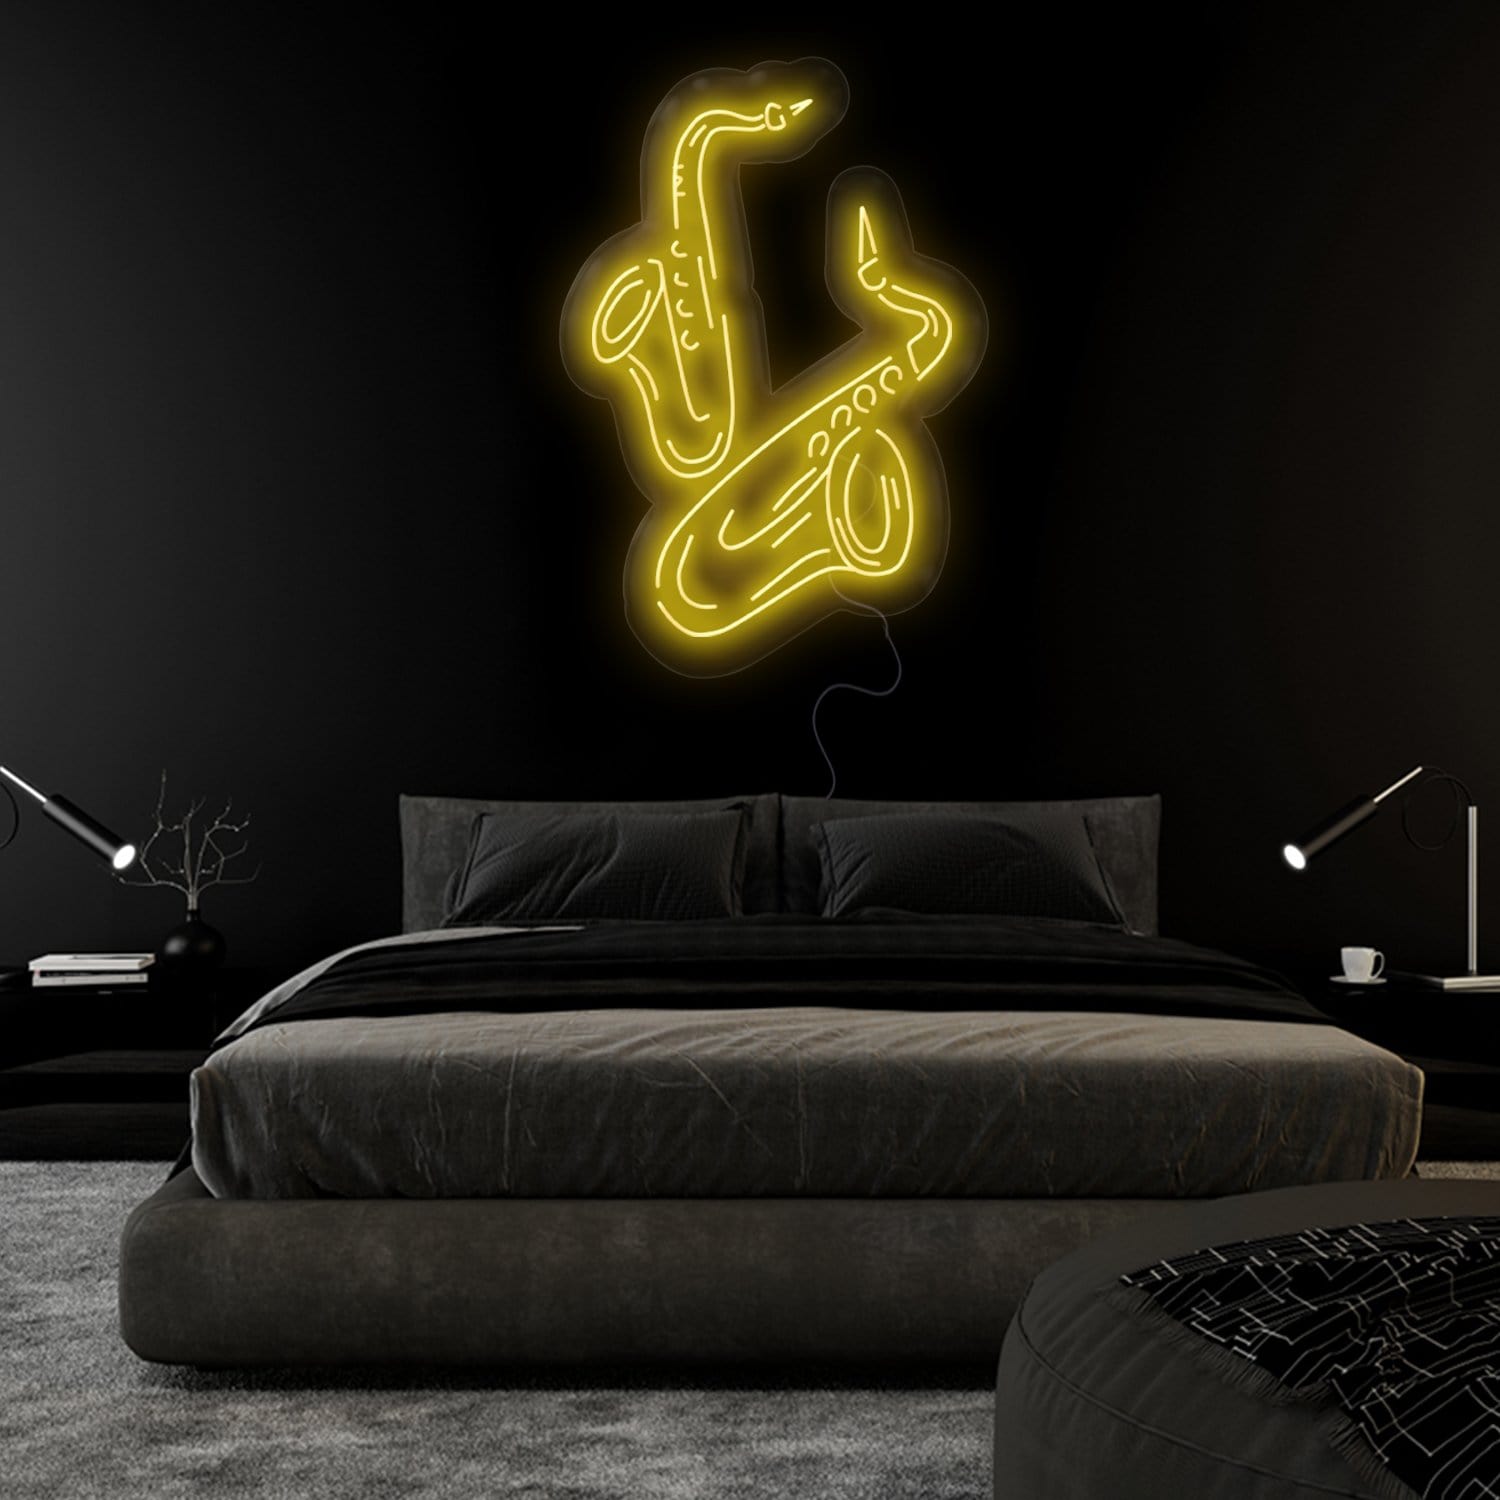 "Jazz Musik" LED Neonschild Sign - NEONEVERGLOW